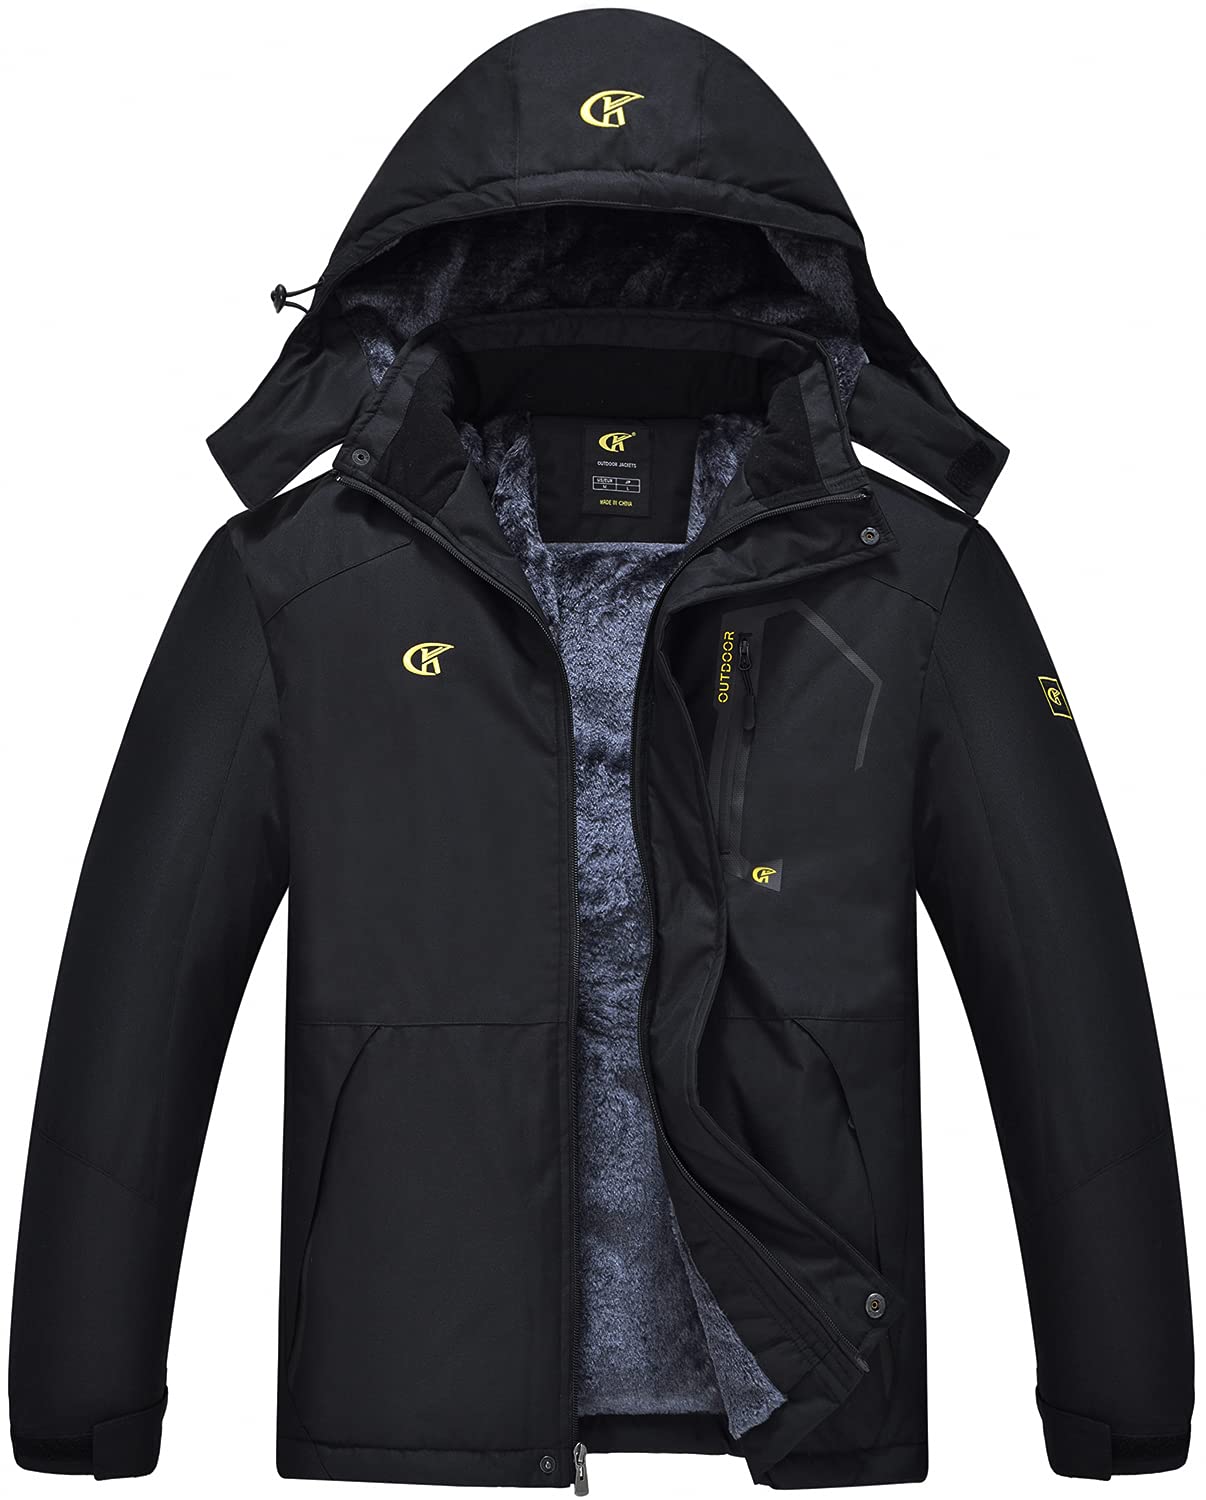 QPNgRP Mens Waterproof Ski Snowboarding Jacket Winter Windproof Snow coat Black Medium